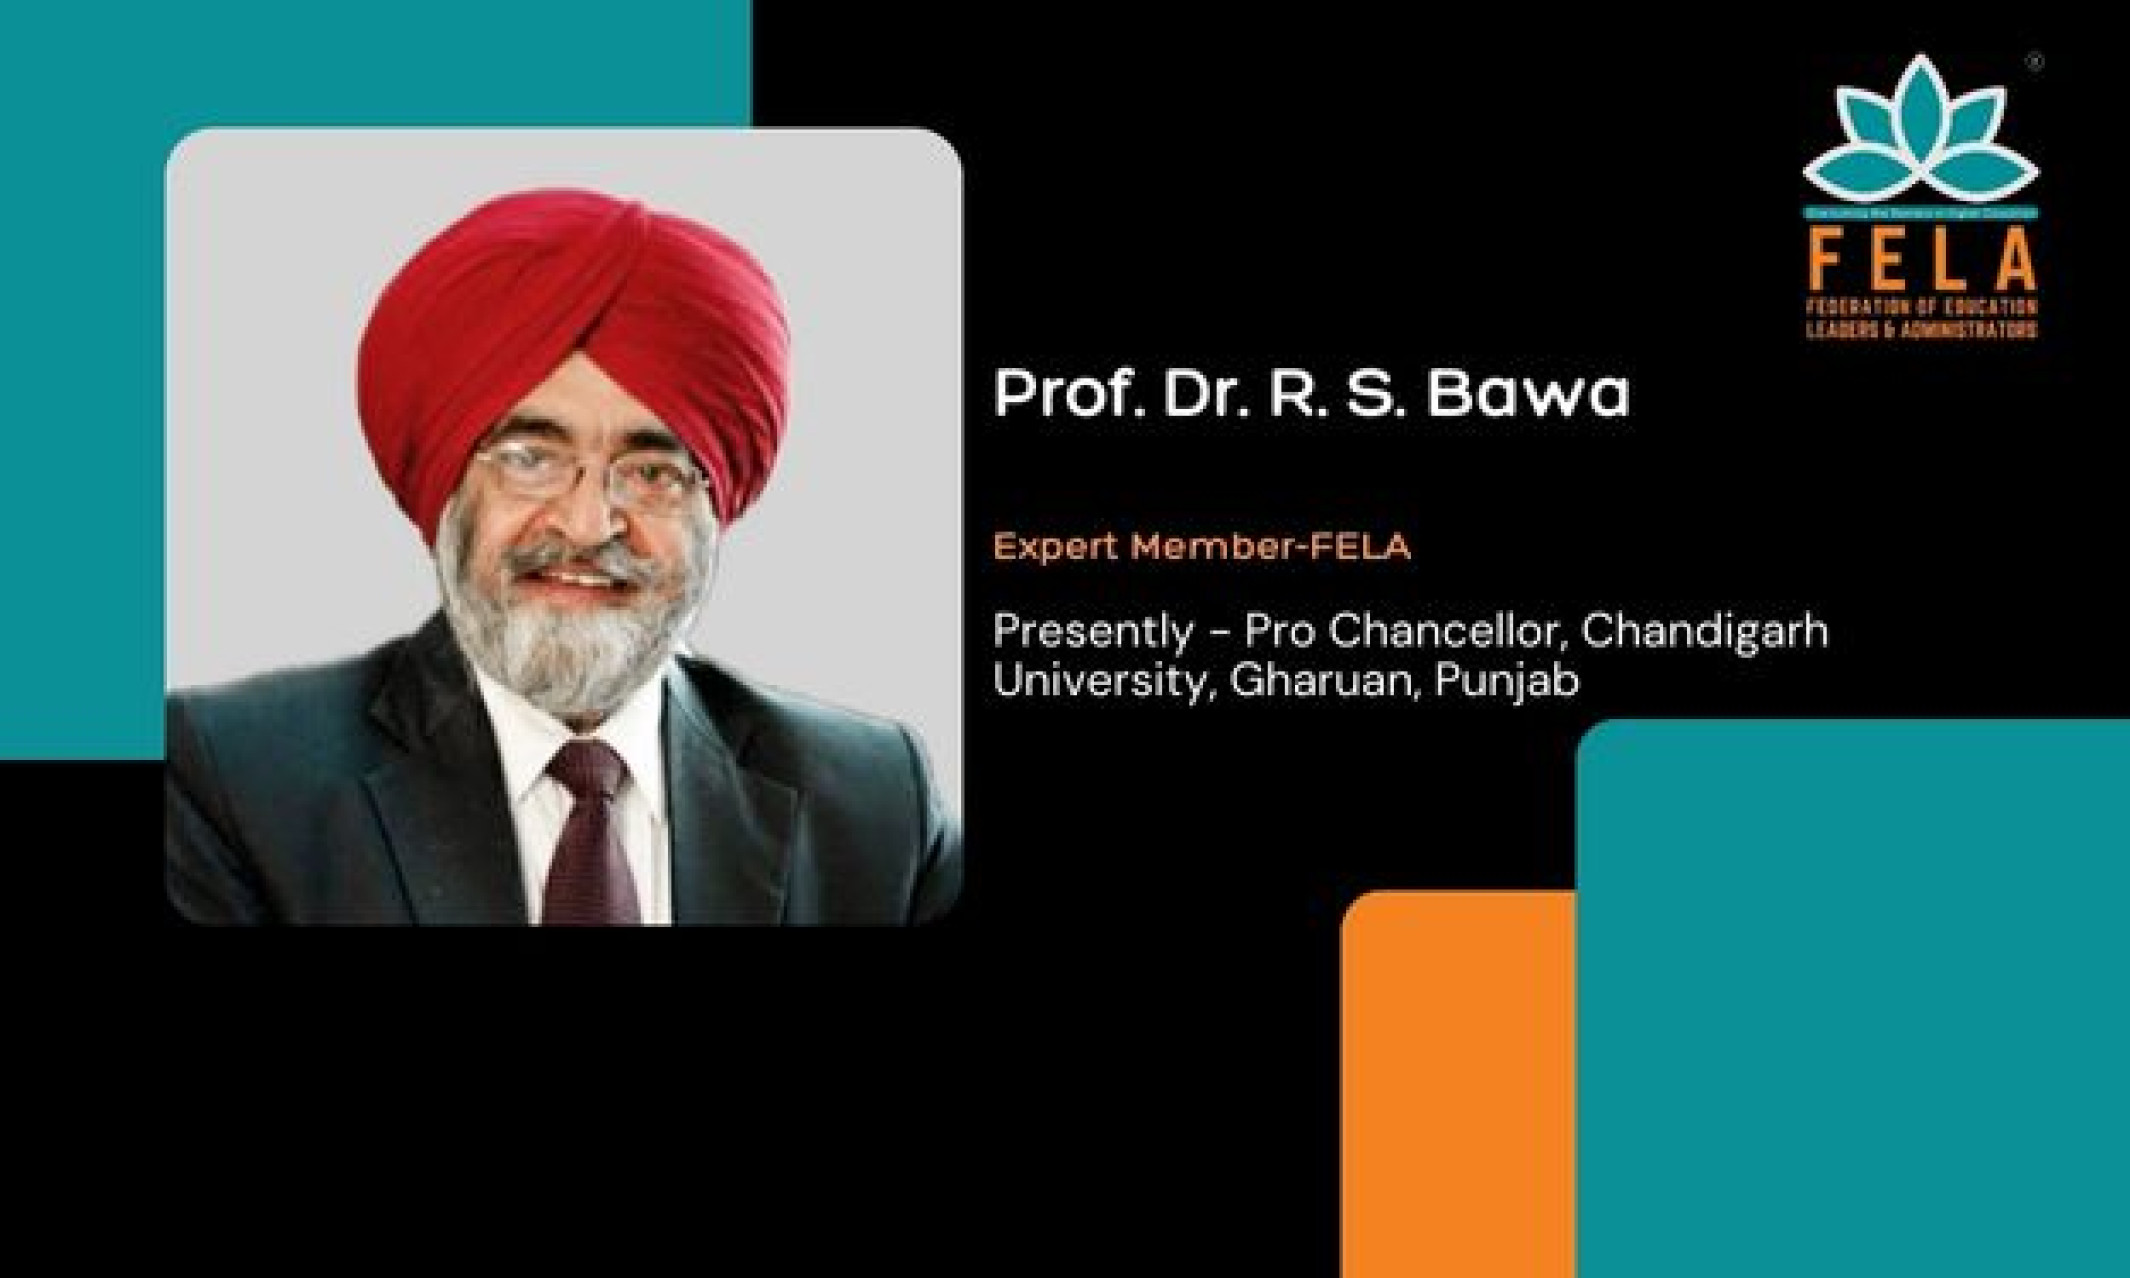 Prof. Dr. R. S. Bawa